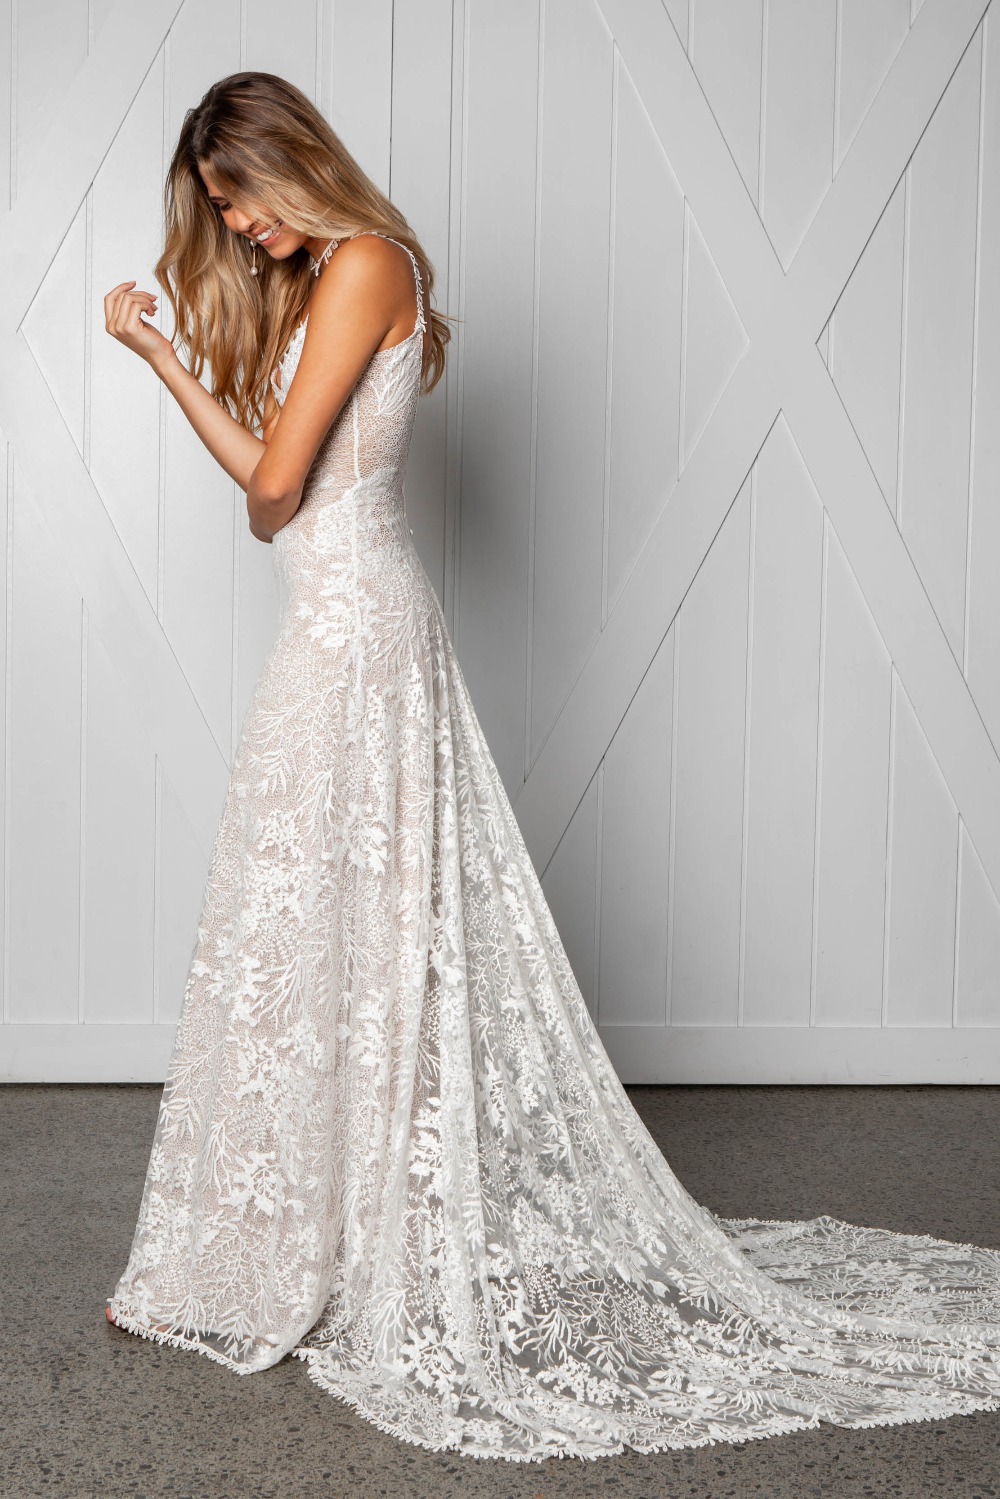 sol-wedding-dress-by-grace-loves-lace-1600-x-1067